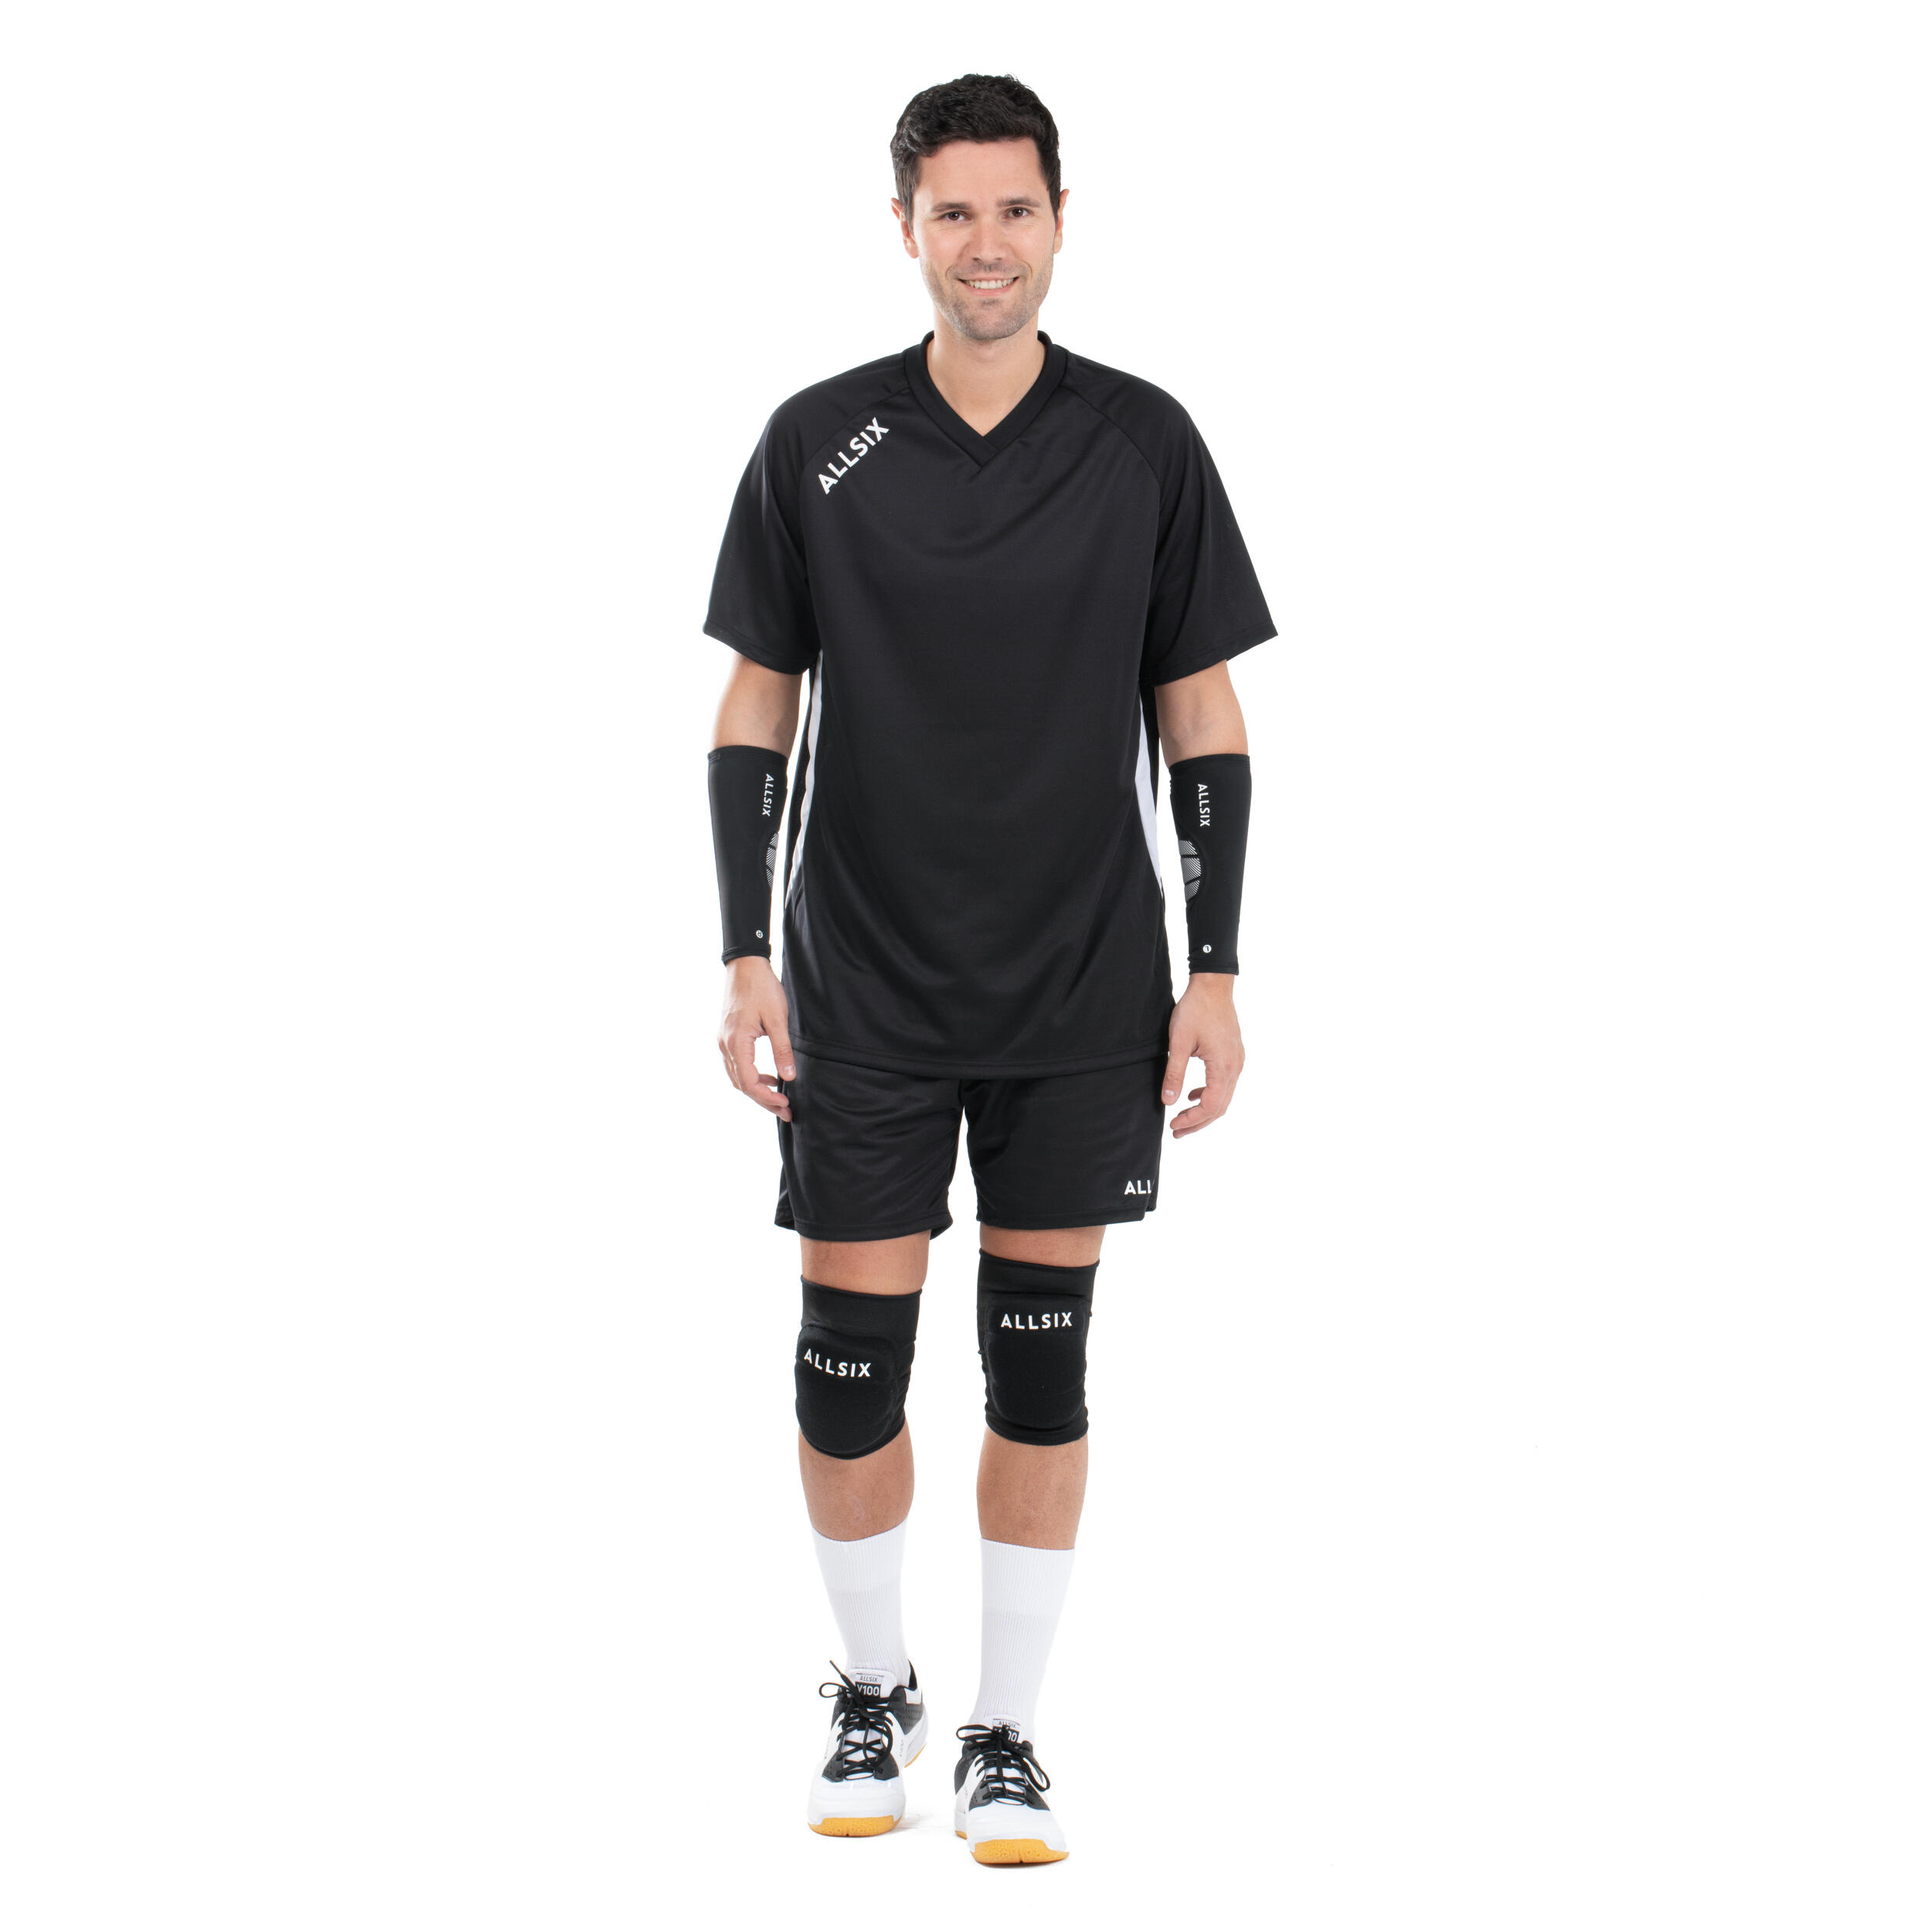 VAP100 Volleyball Sleeves - Black 8/19